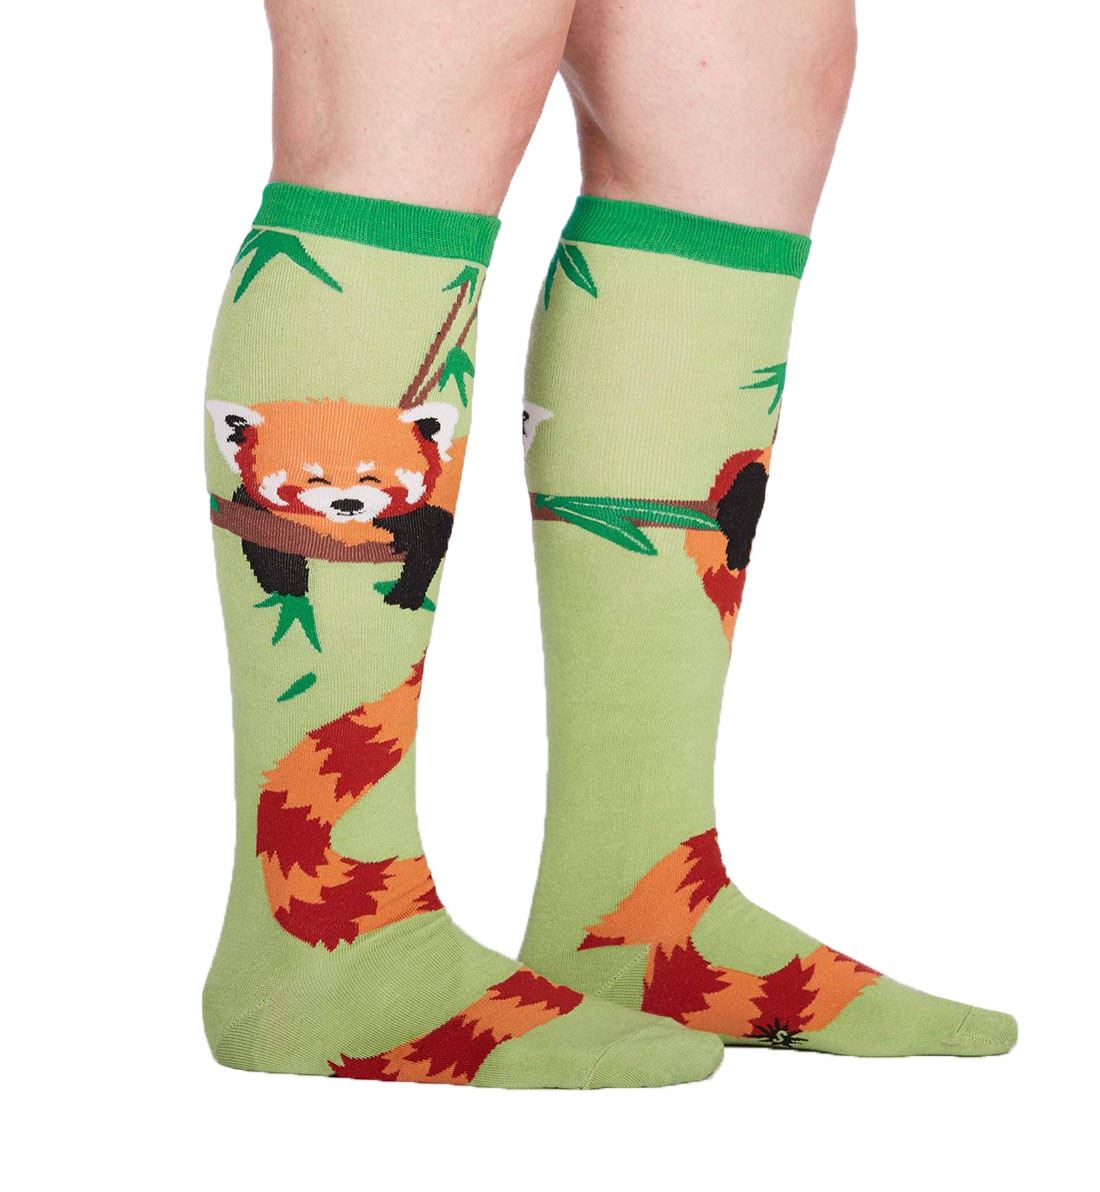 SOCK it to me Unisex Knee High Socks (f0418),Tale Of The Red Panda - Tale Of The Red Panda,One Size